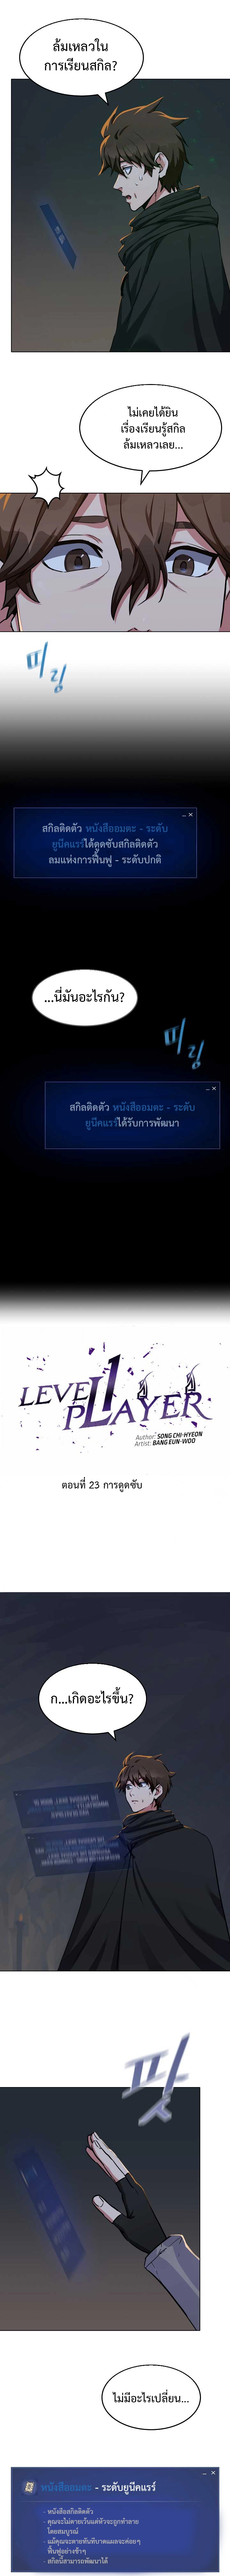 Level 1 Player23 (4)